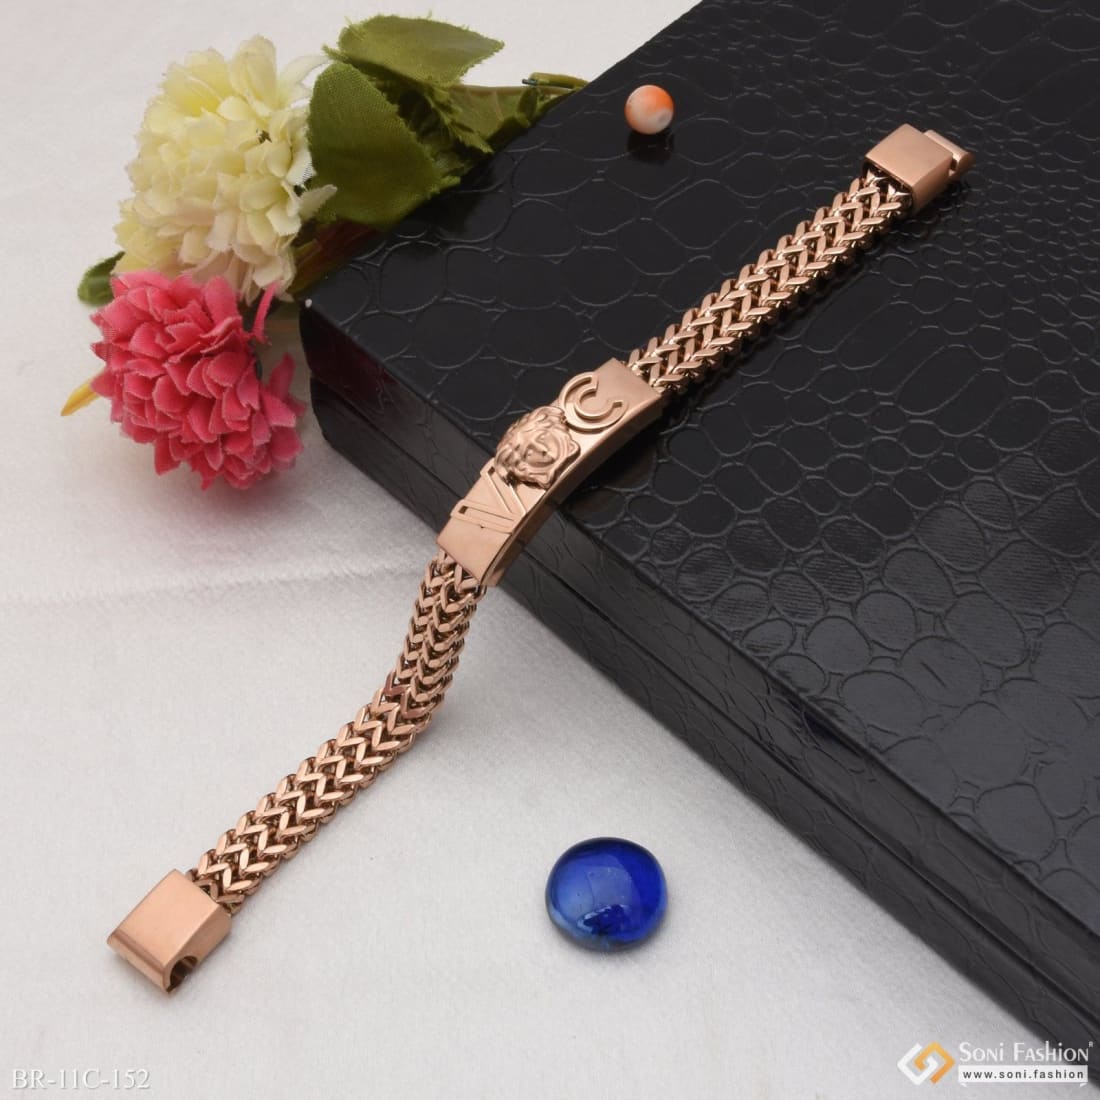 Bracelet Design Rose gold and White Strap Analog Watch For Girls - Daraz  India